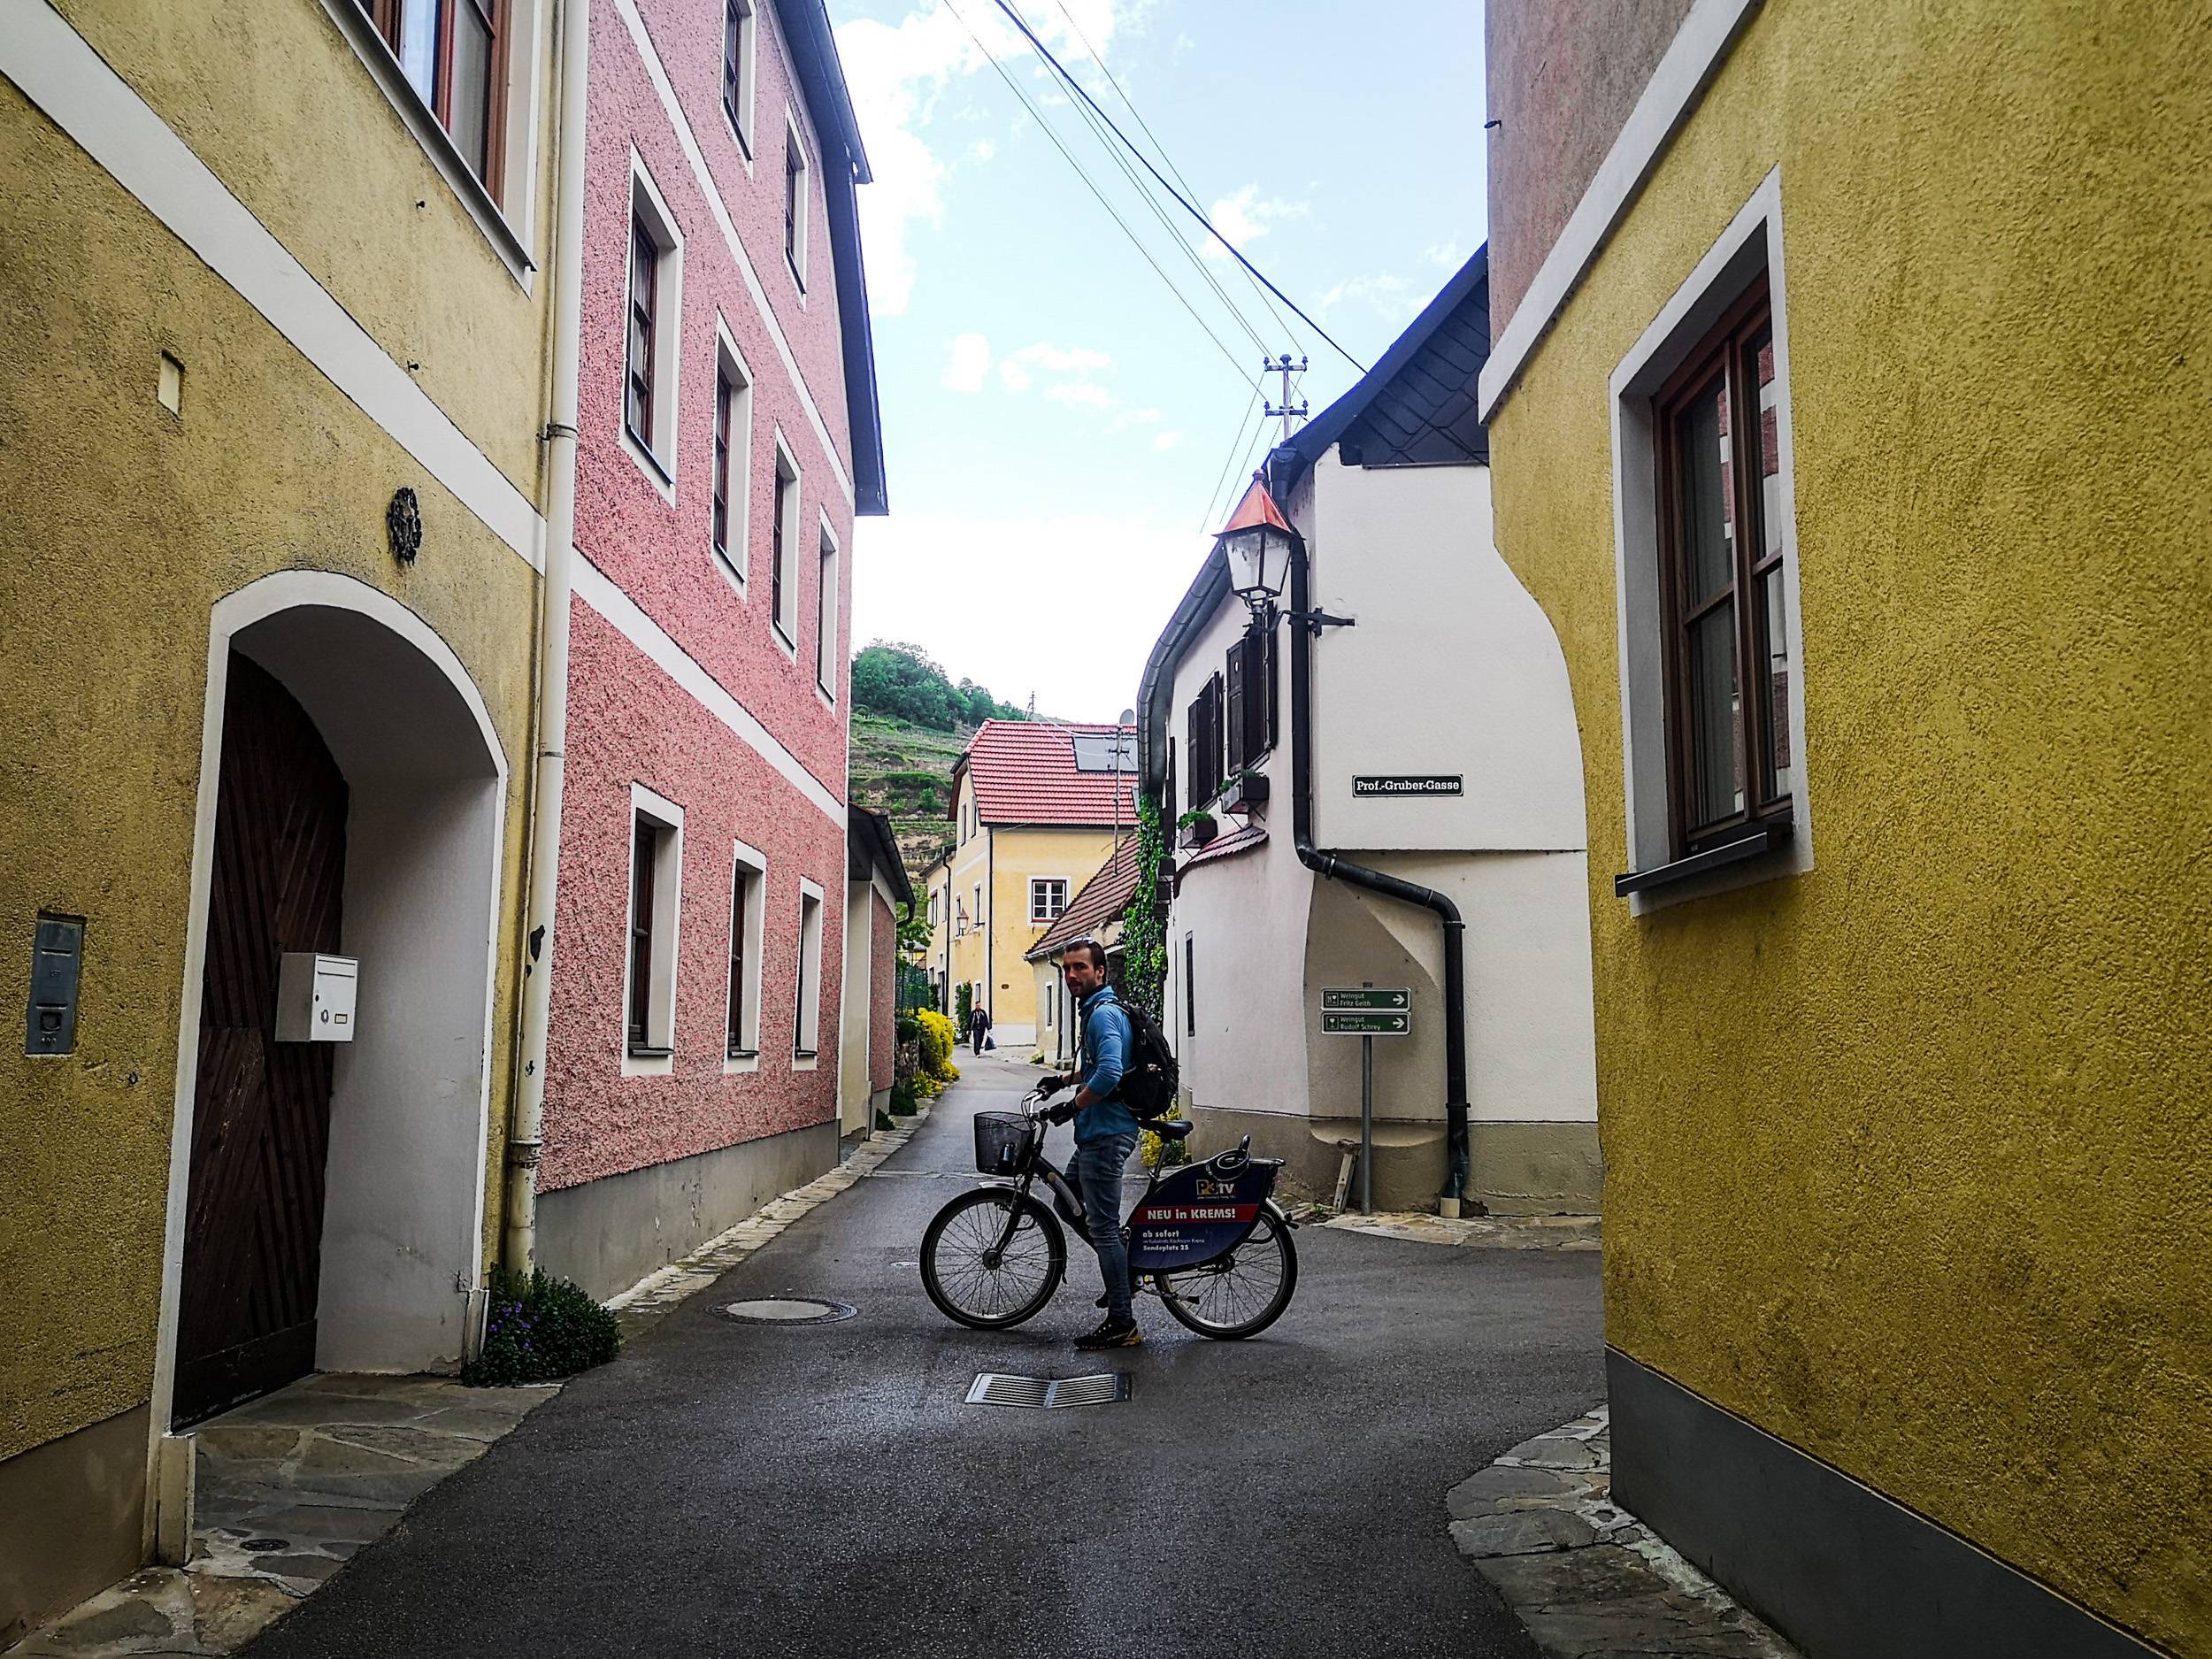 Riding a bike in the narrow streets of Wösendorf in der Wachau, Austria